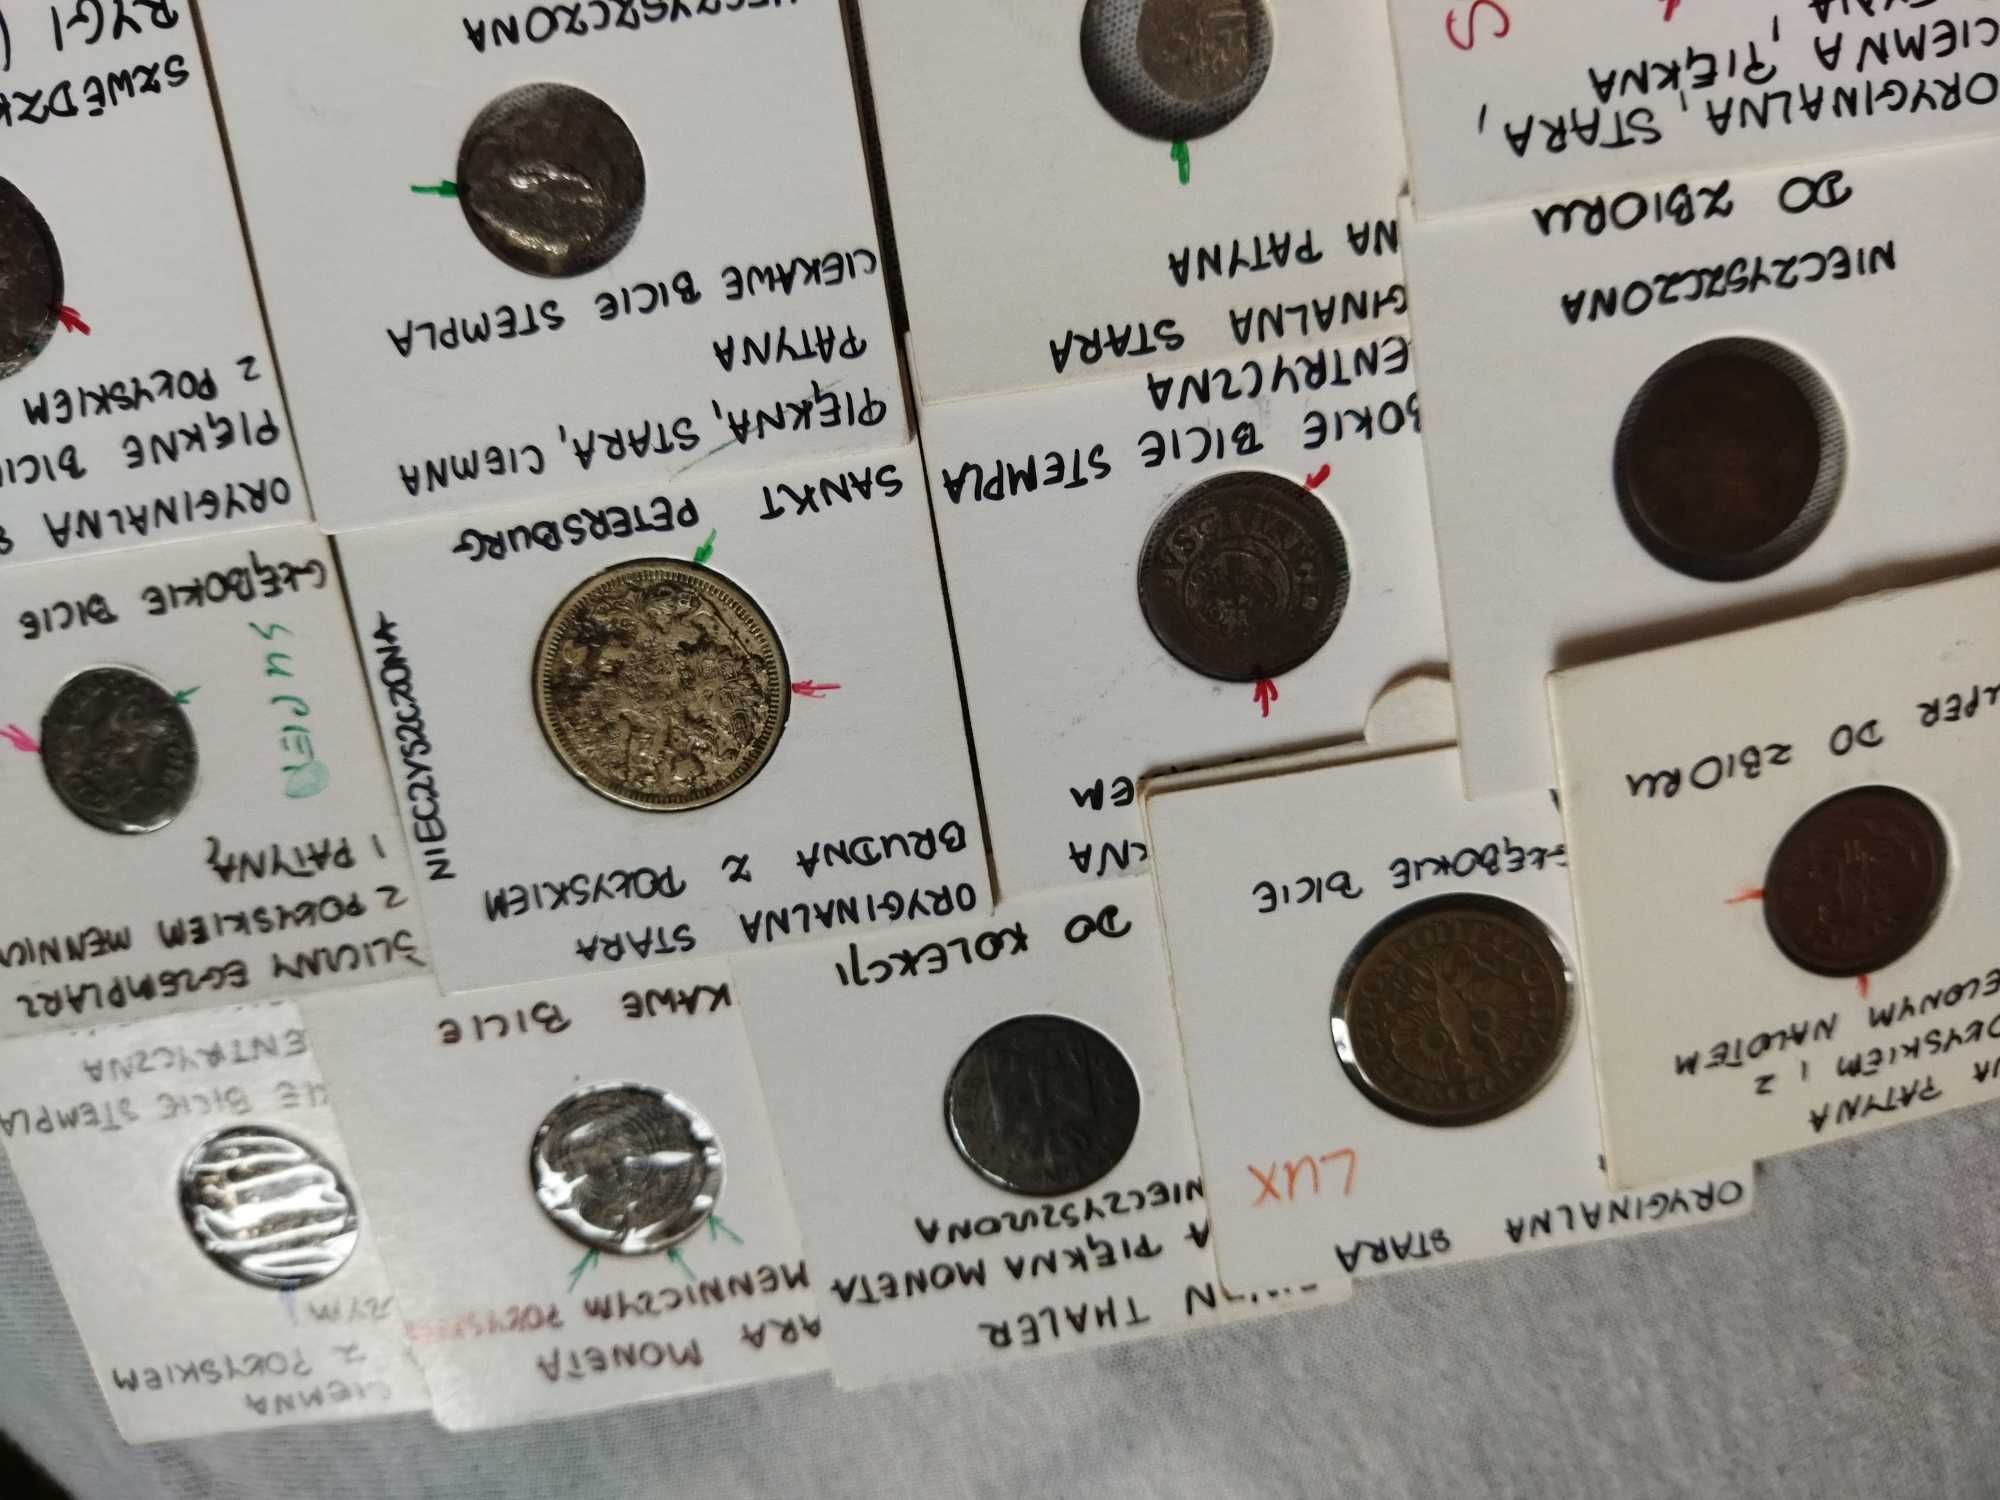 Stare monety ze zbioru.